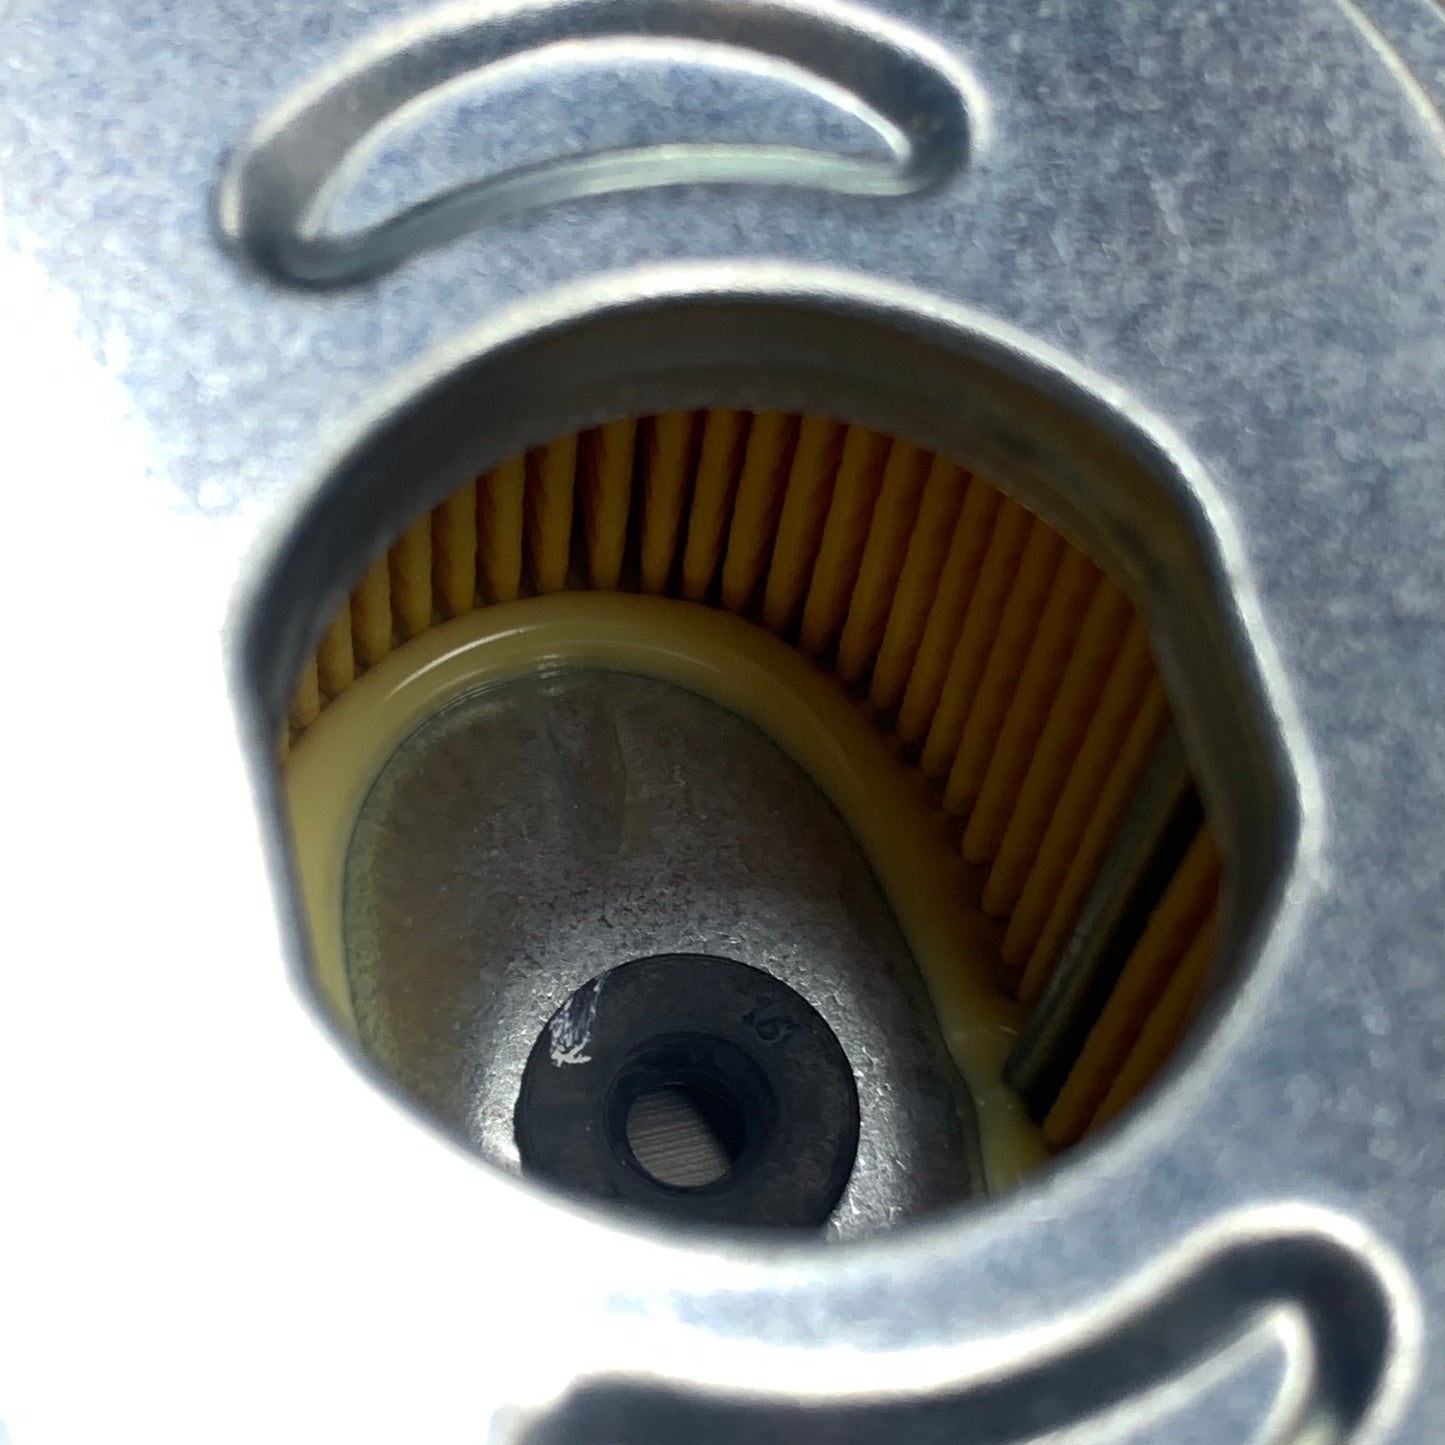 HONDA Small Engine Air Filter for GX100, GX120 17210-ZE0-505 (New)